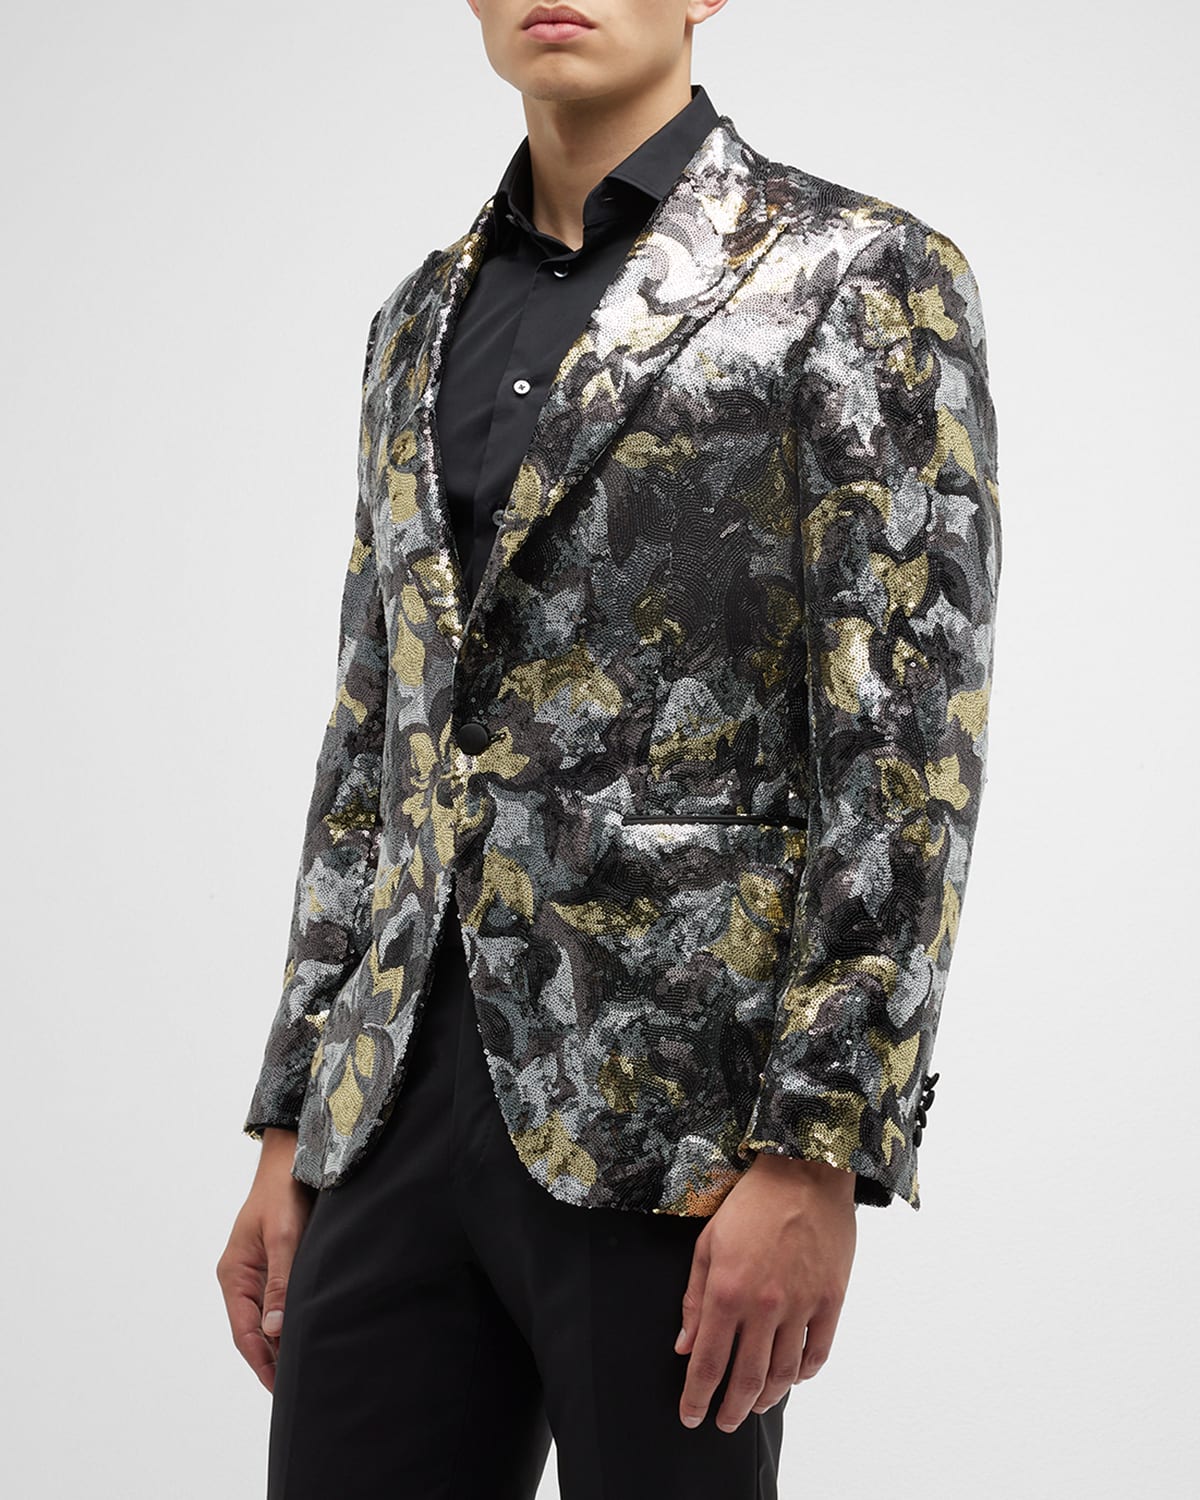 Etro Men's Sequin Camo Blazer